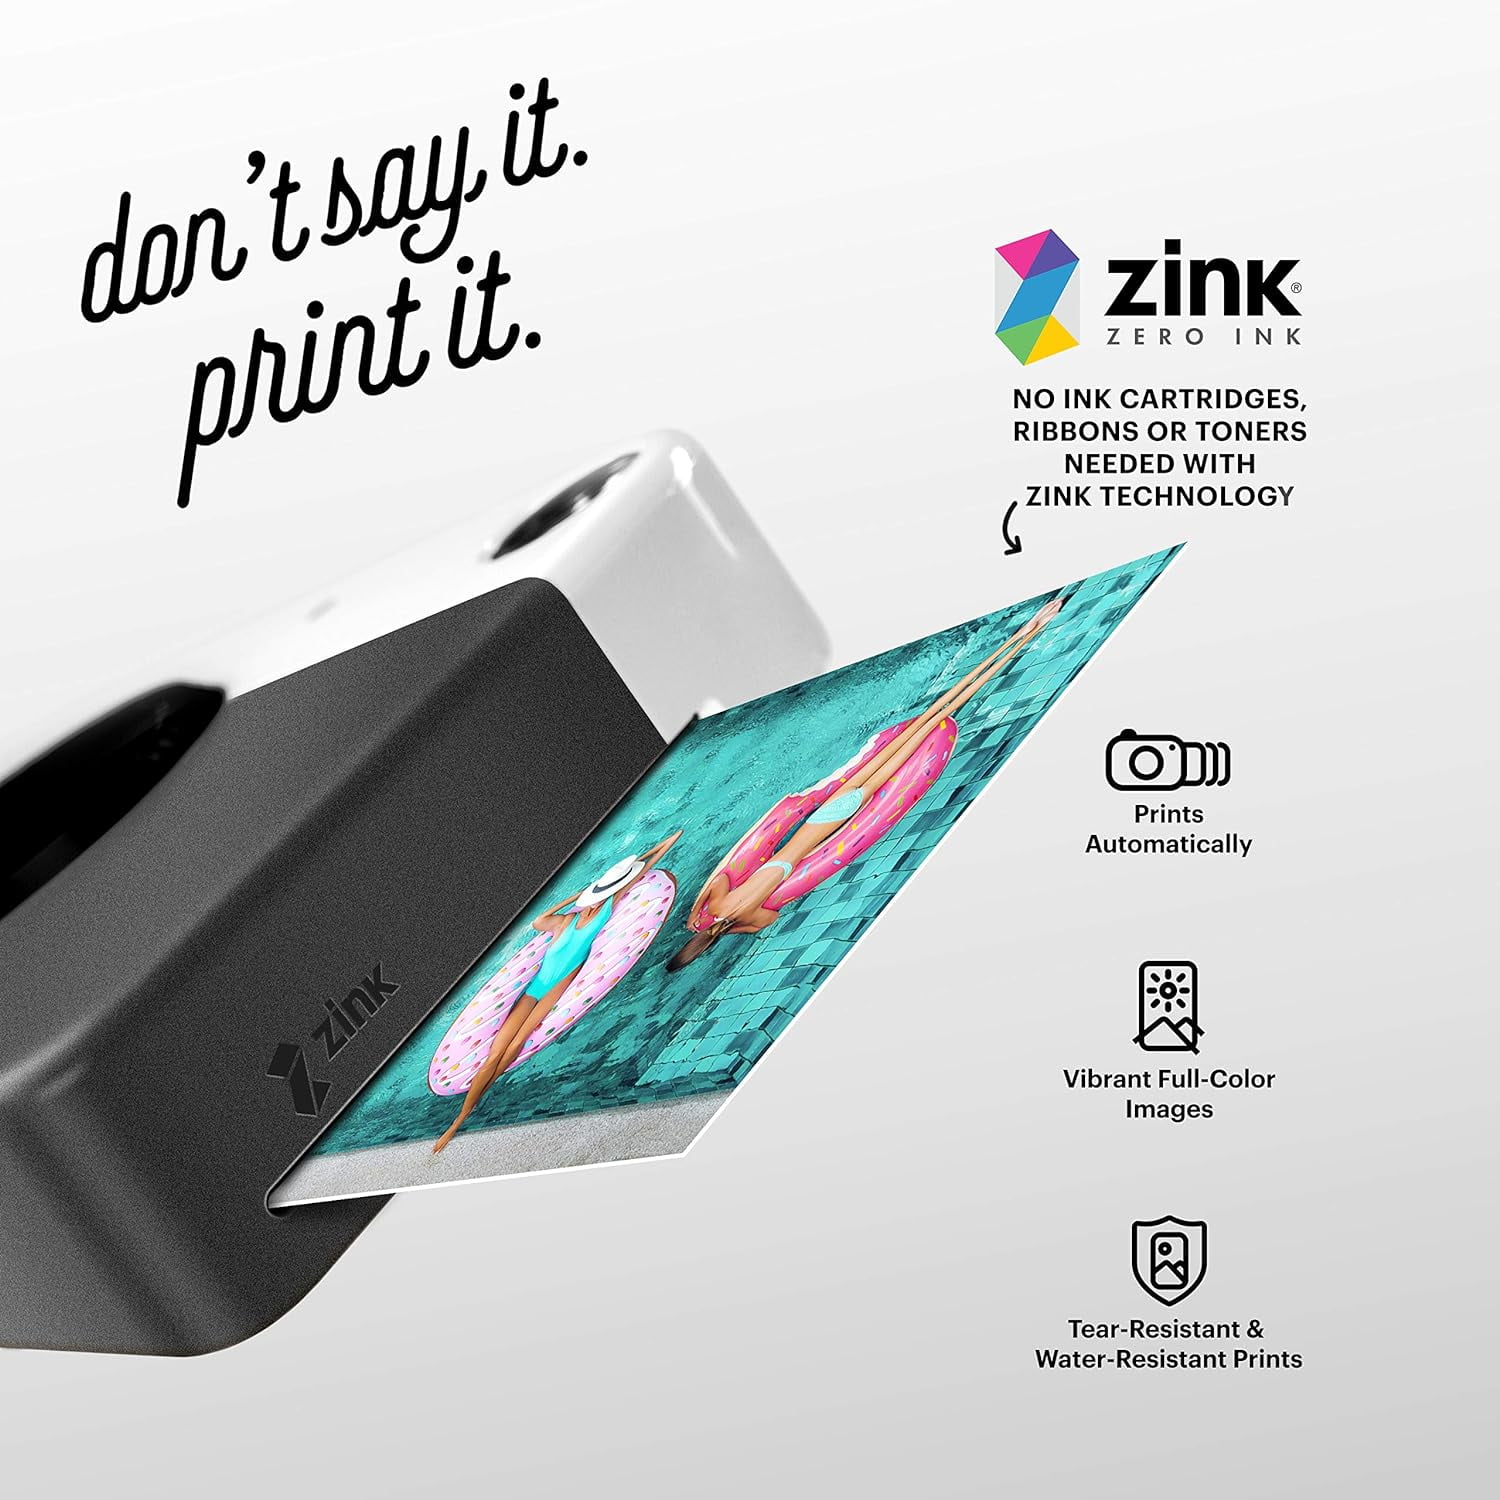 KODAK Printomatic Digital Instant Print Camera, Supports Sticky-Backed 2x3  Zink Photo Paper